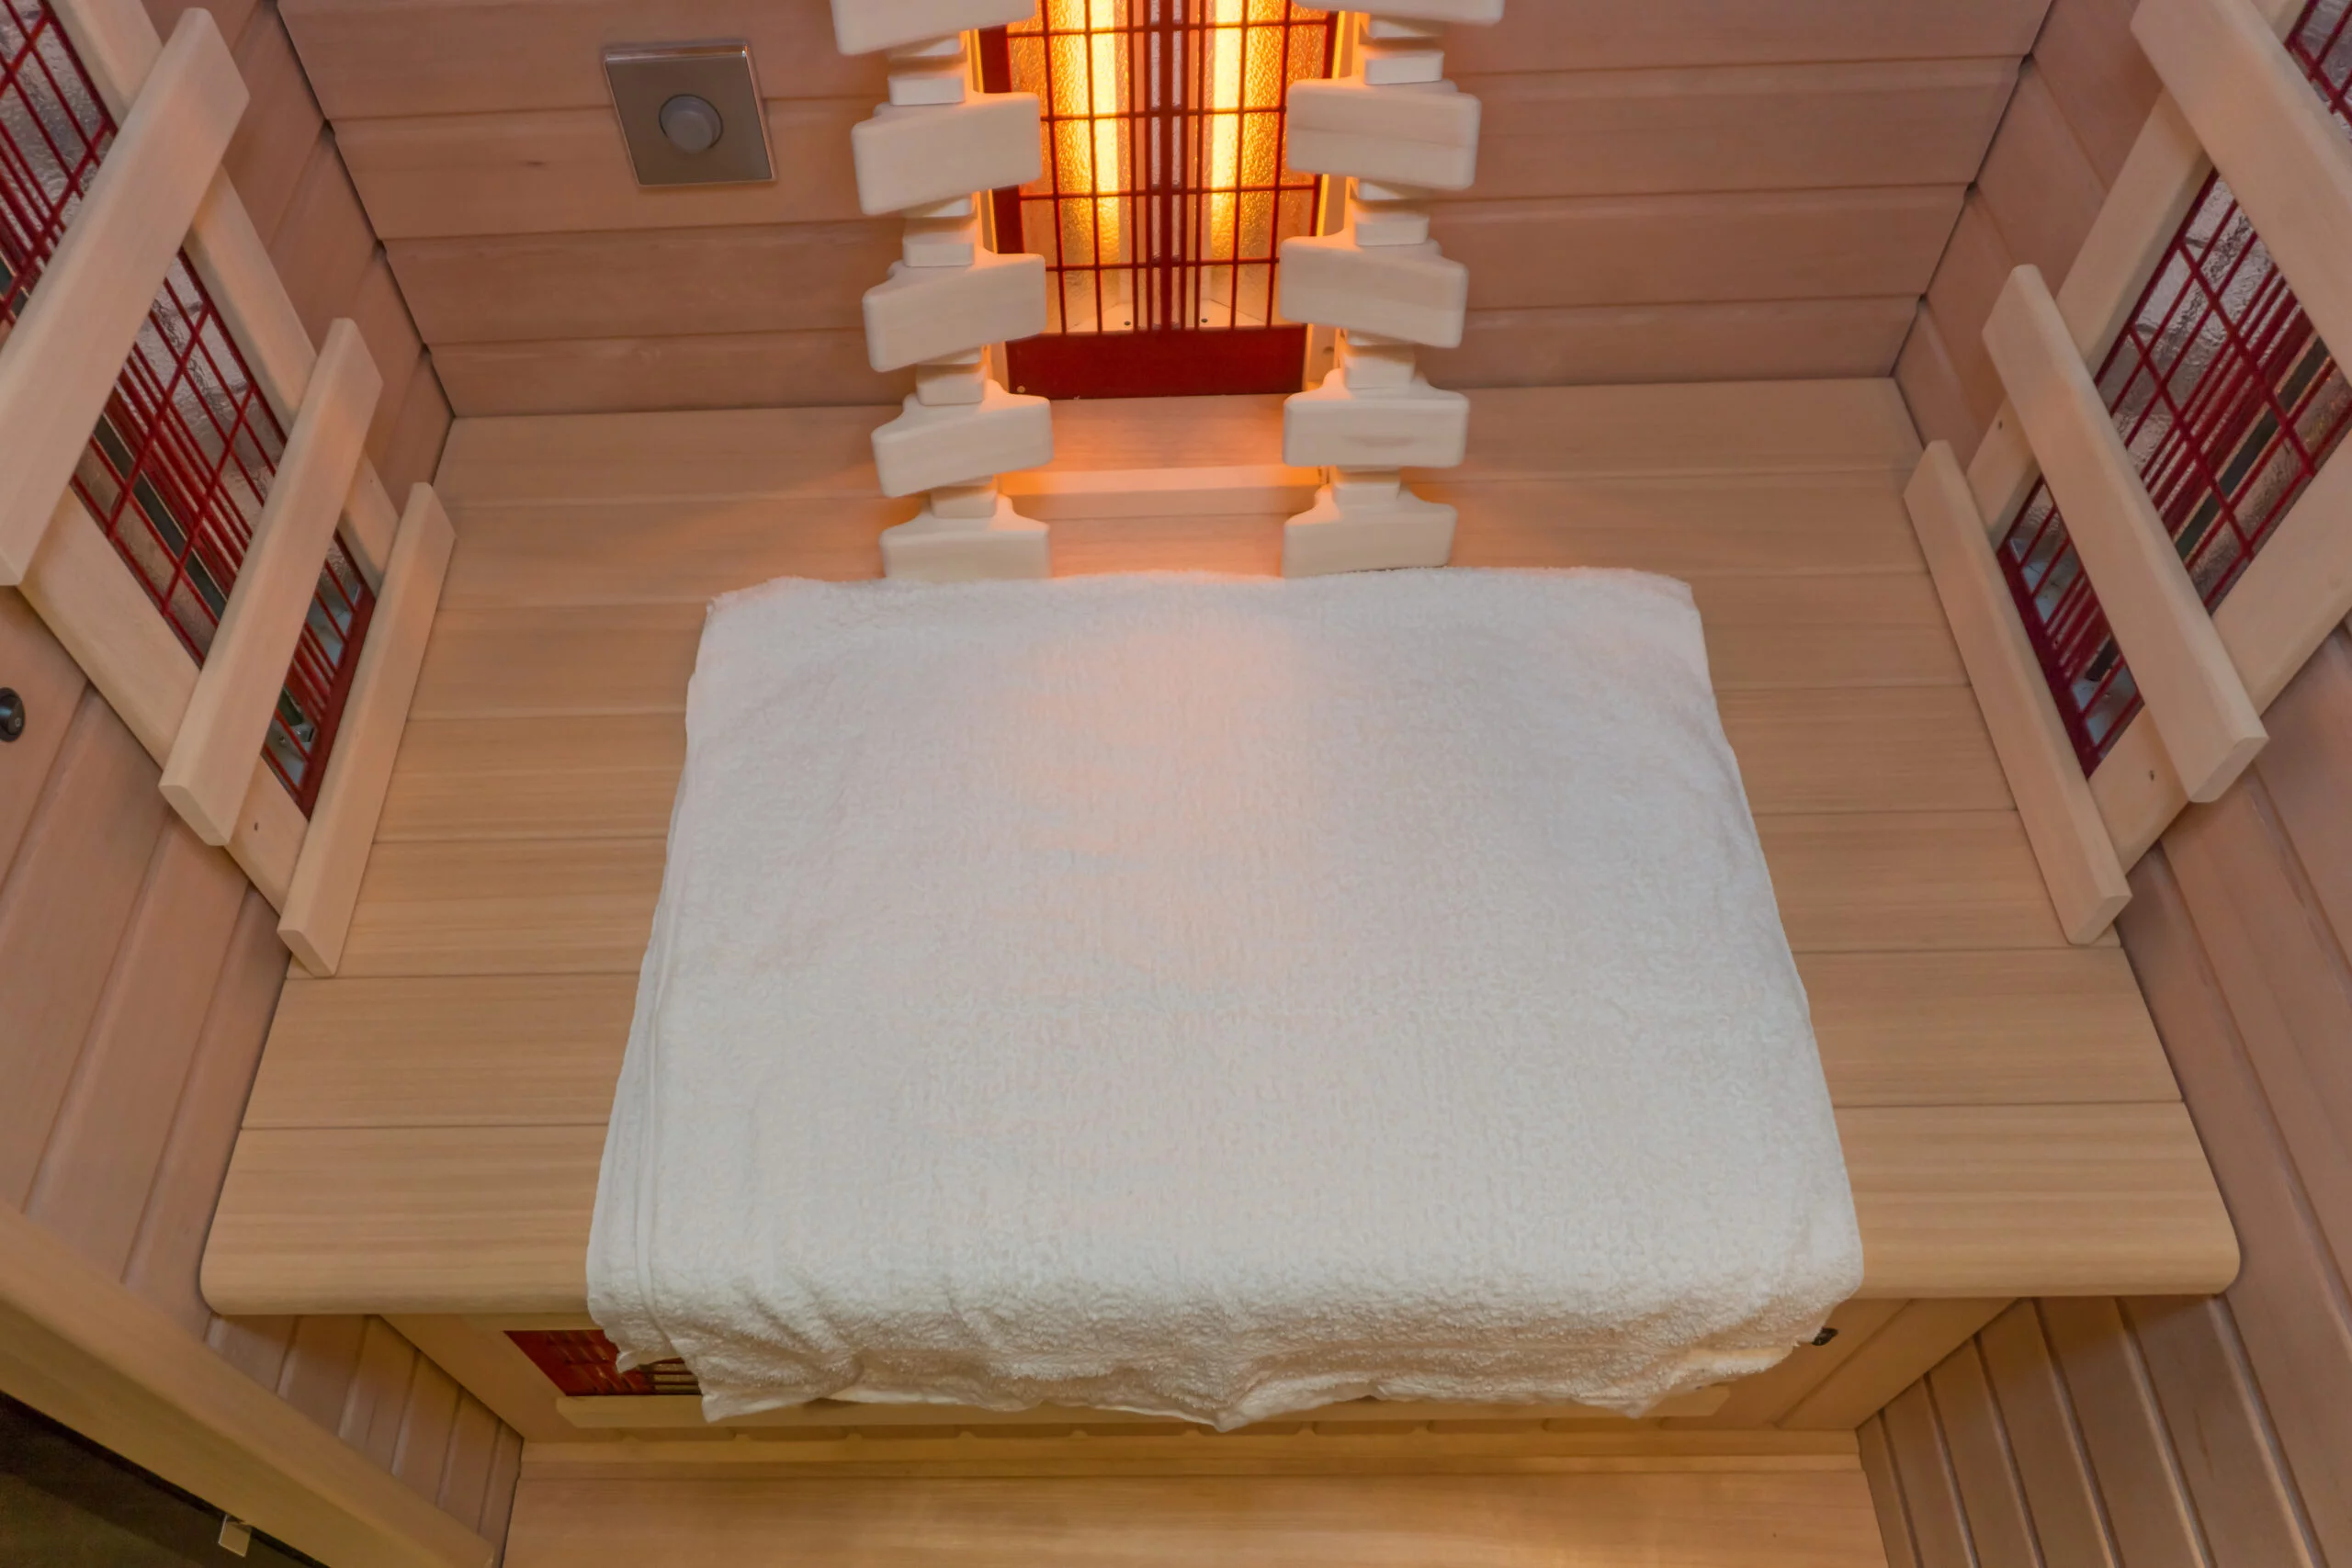 The inside of an infrared sauna